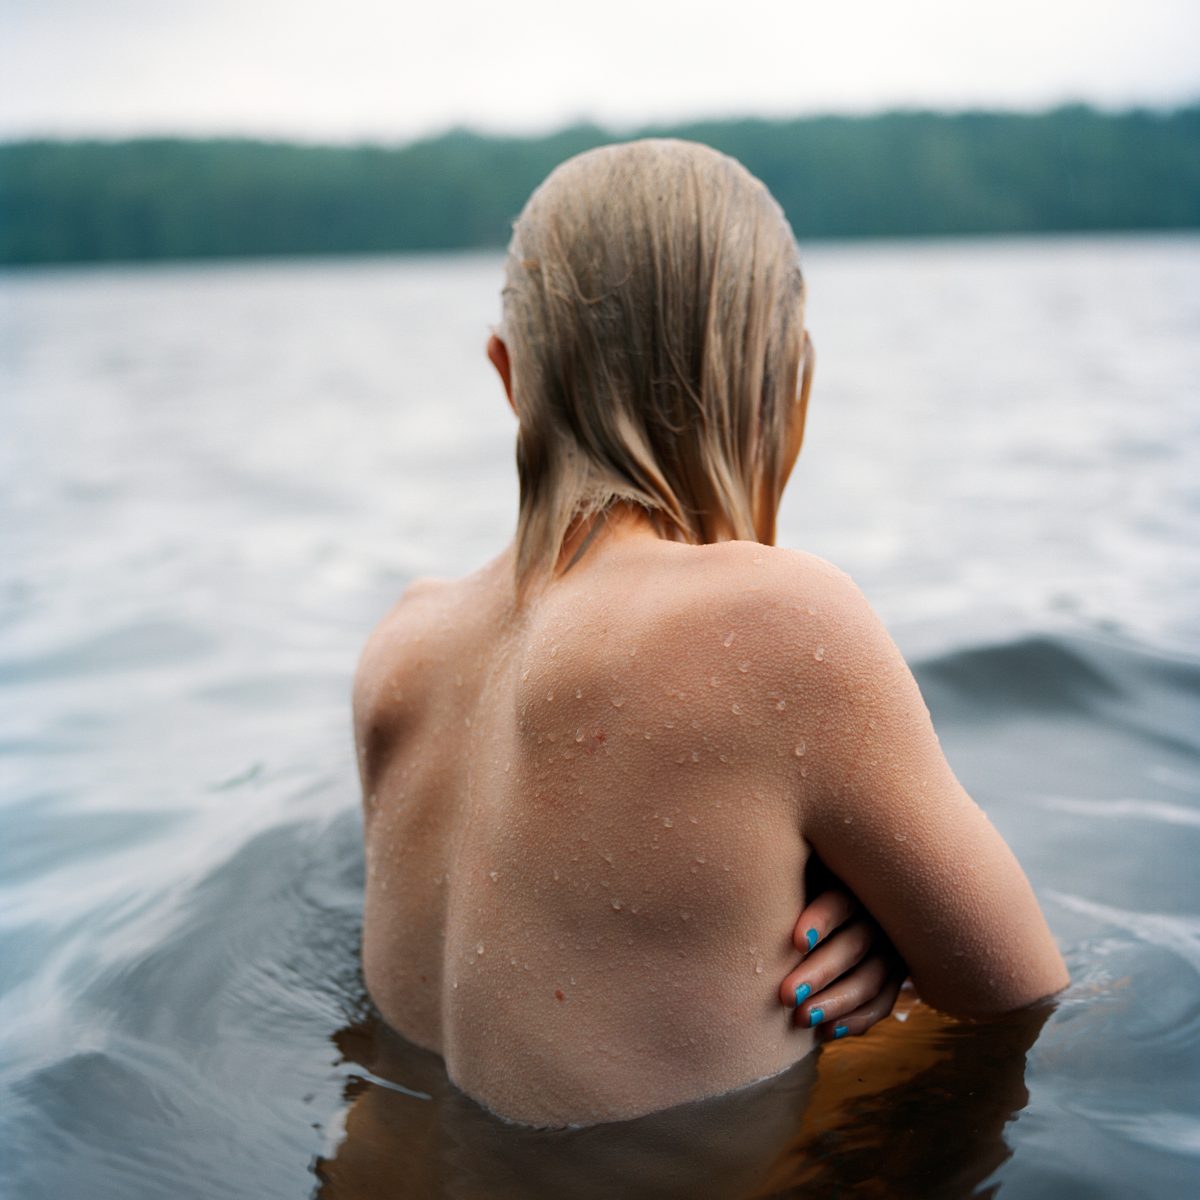 $2. Untitled (Fiona naked in water) 2010, 5/15 by Jocelyn Lee. 